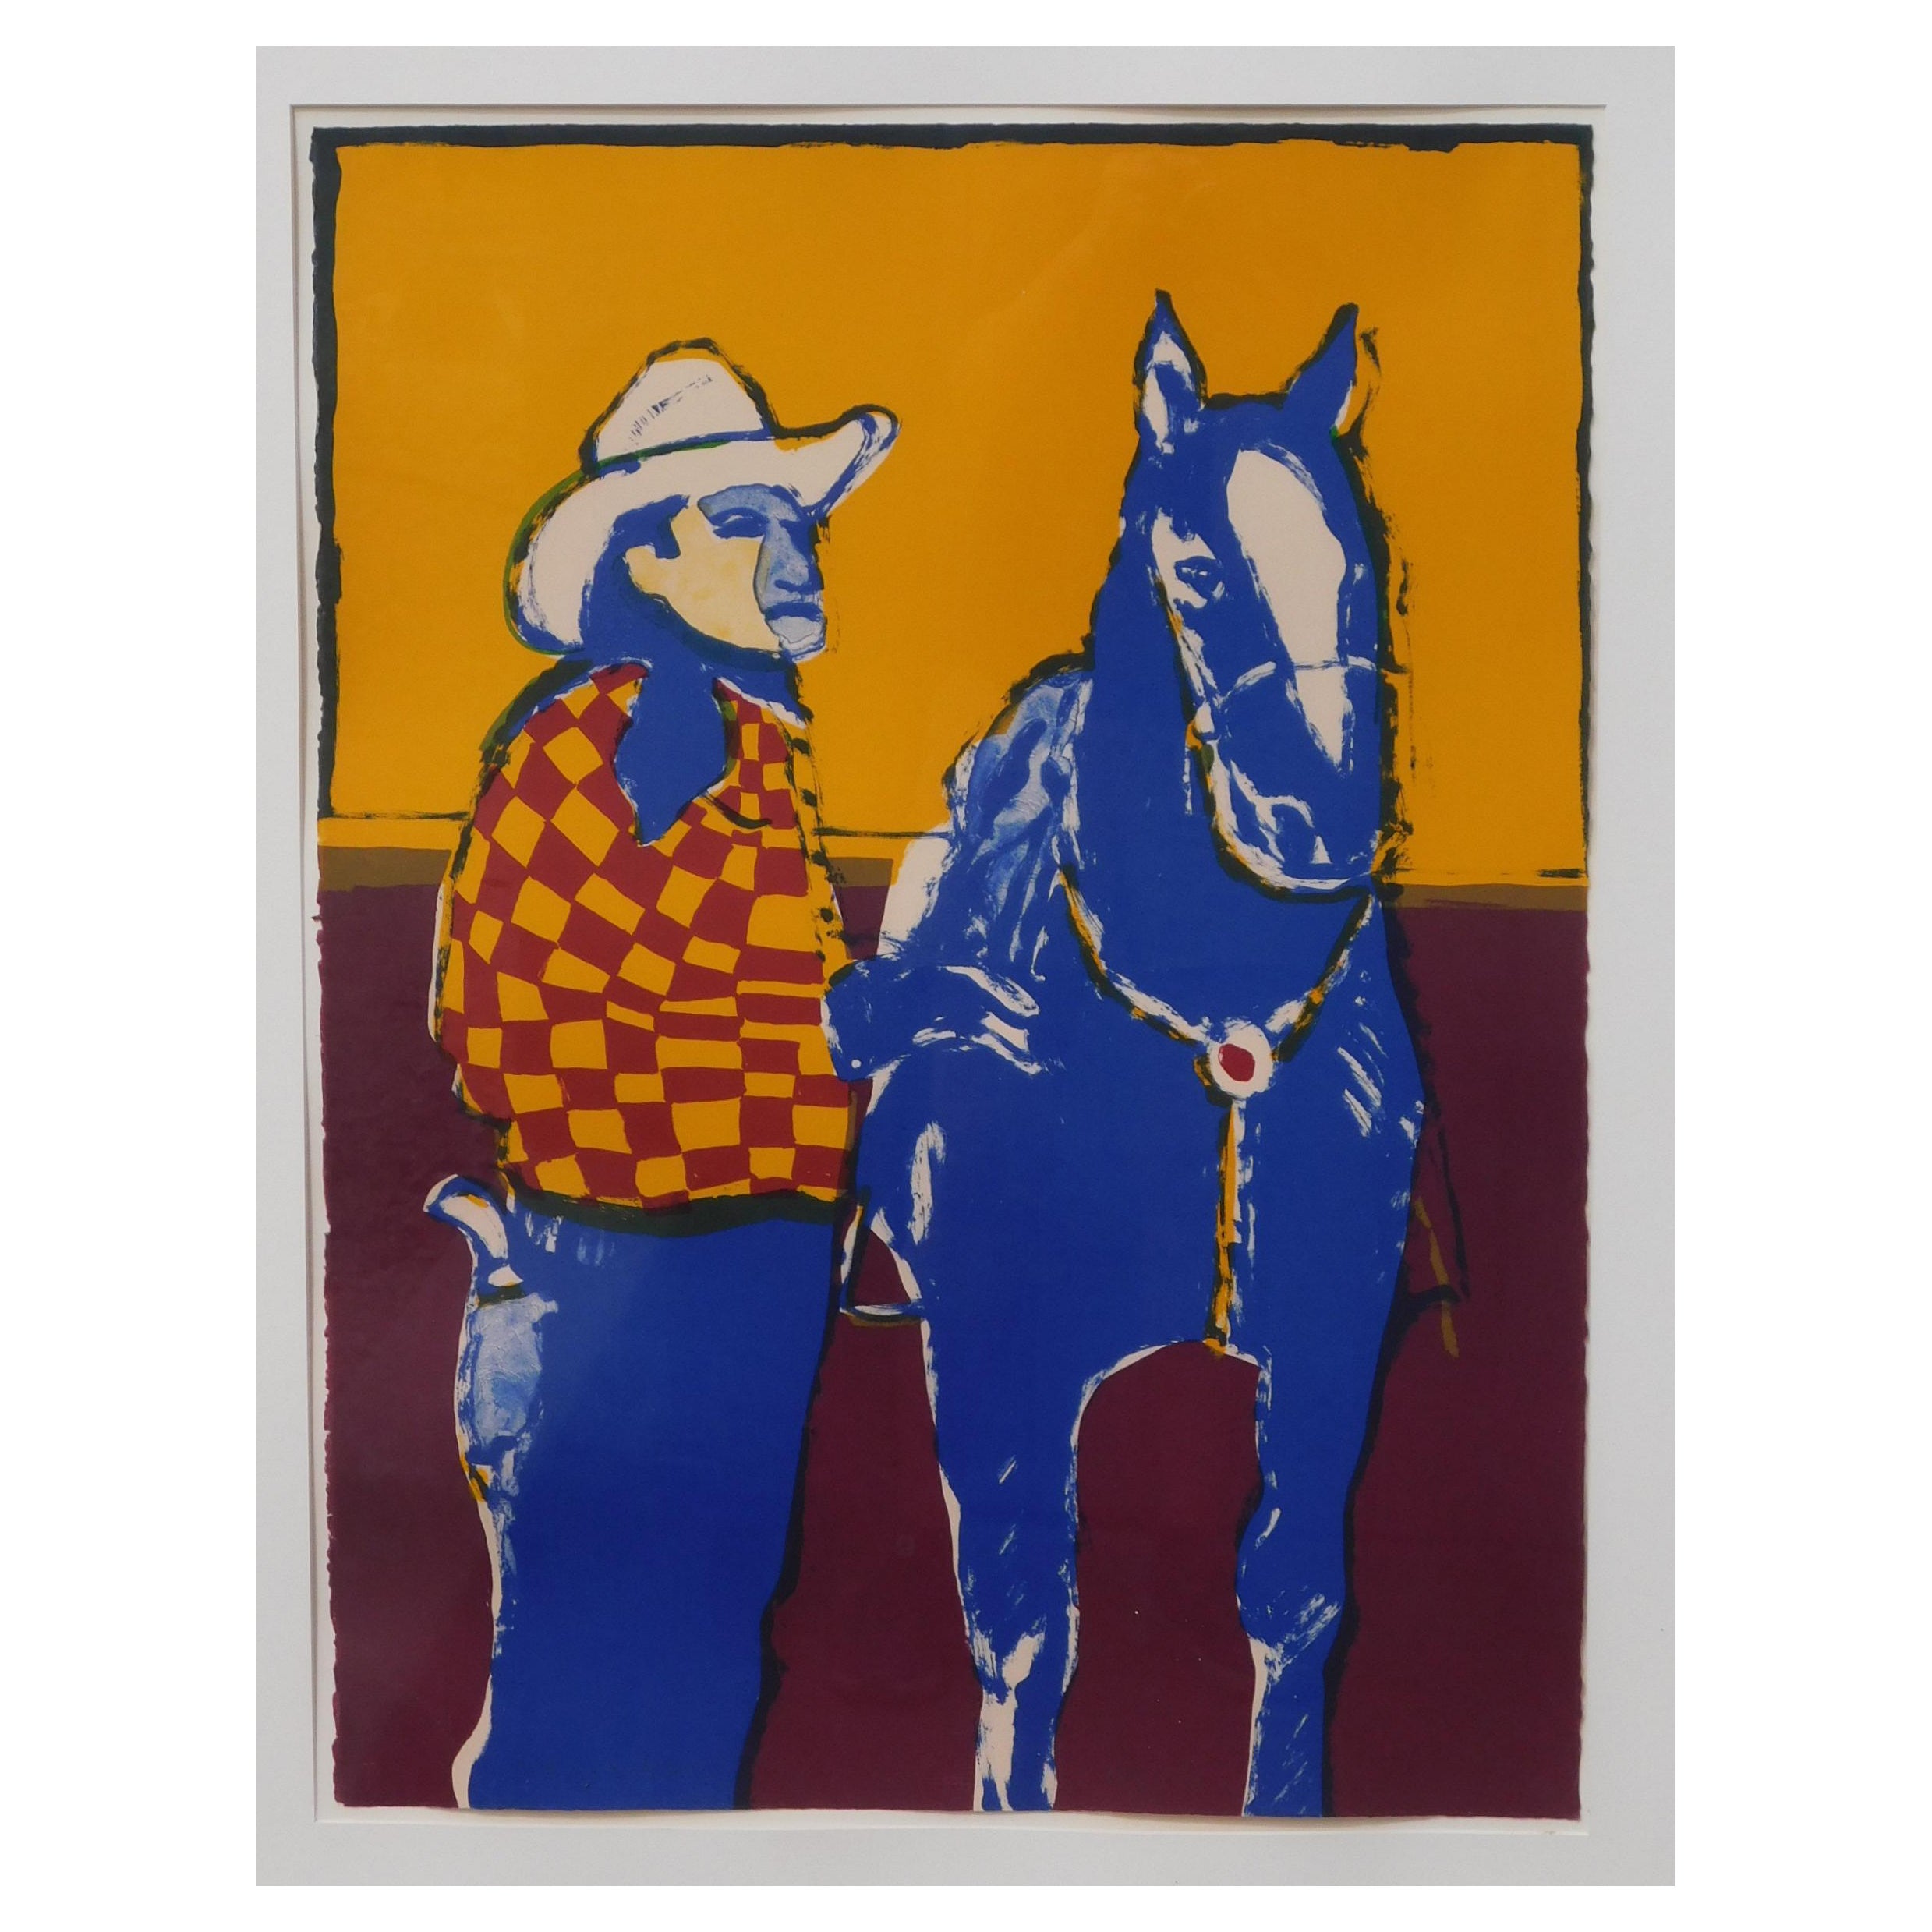 Fritz Scholder Original Color Lithograph, 1979, "Another Matinee Cowboy"